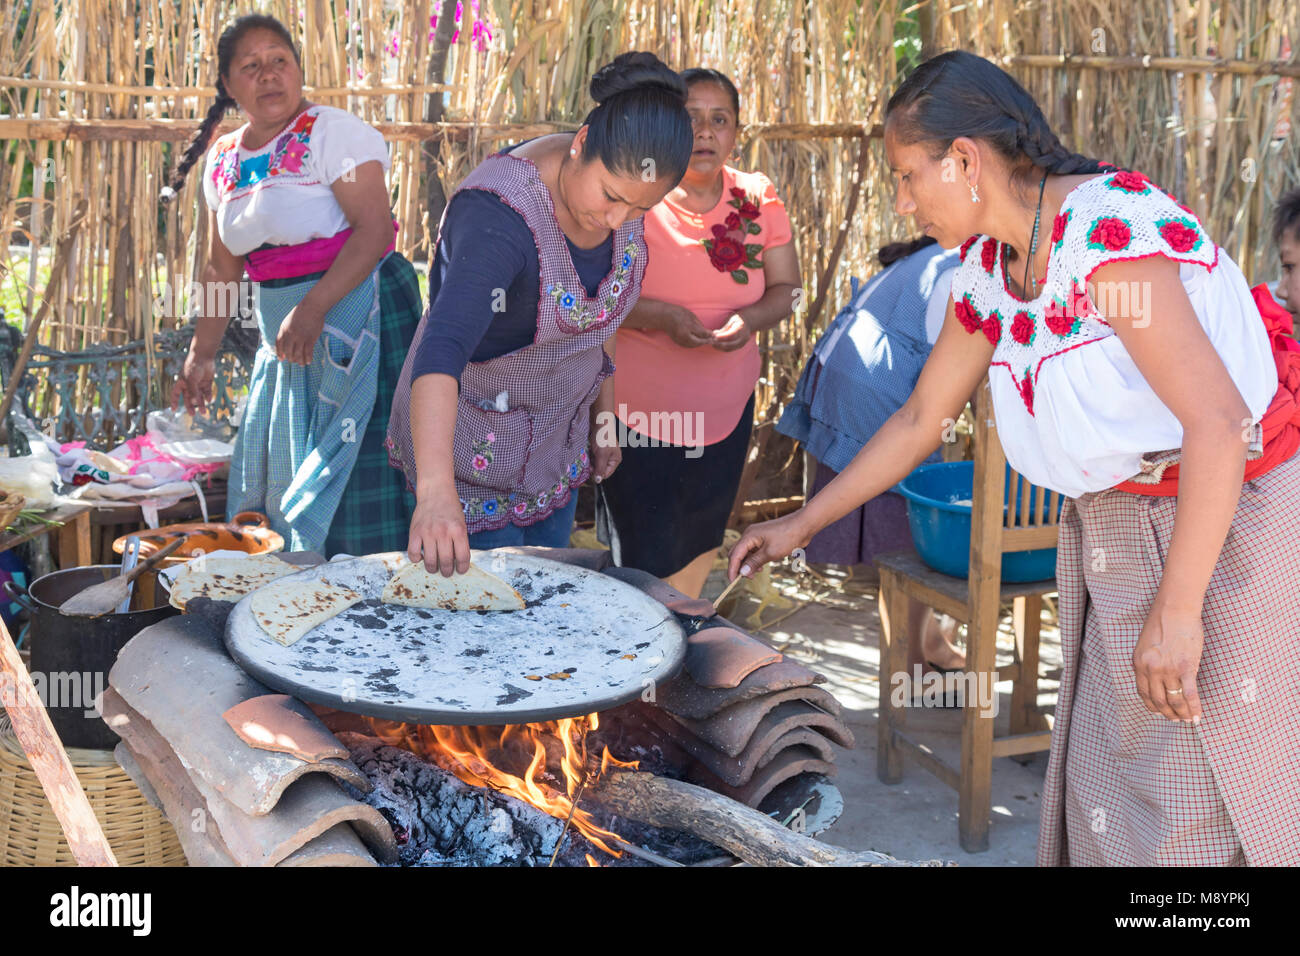 https://c8.alamy.com/comp/M8YPKJ/san-juan-teitipac-oaxaca-mexico-women-making-tortillas-on-a-comal-M8YPKJ.jpg